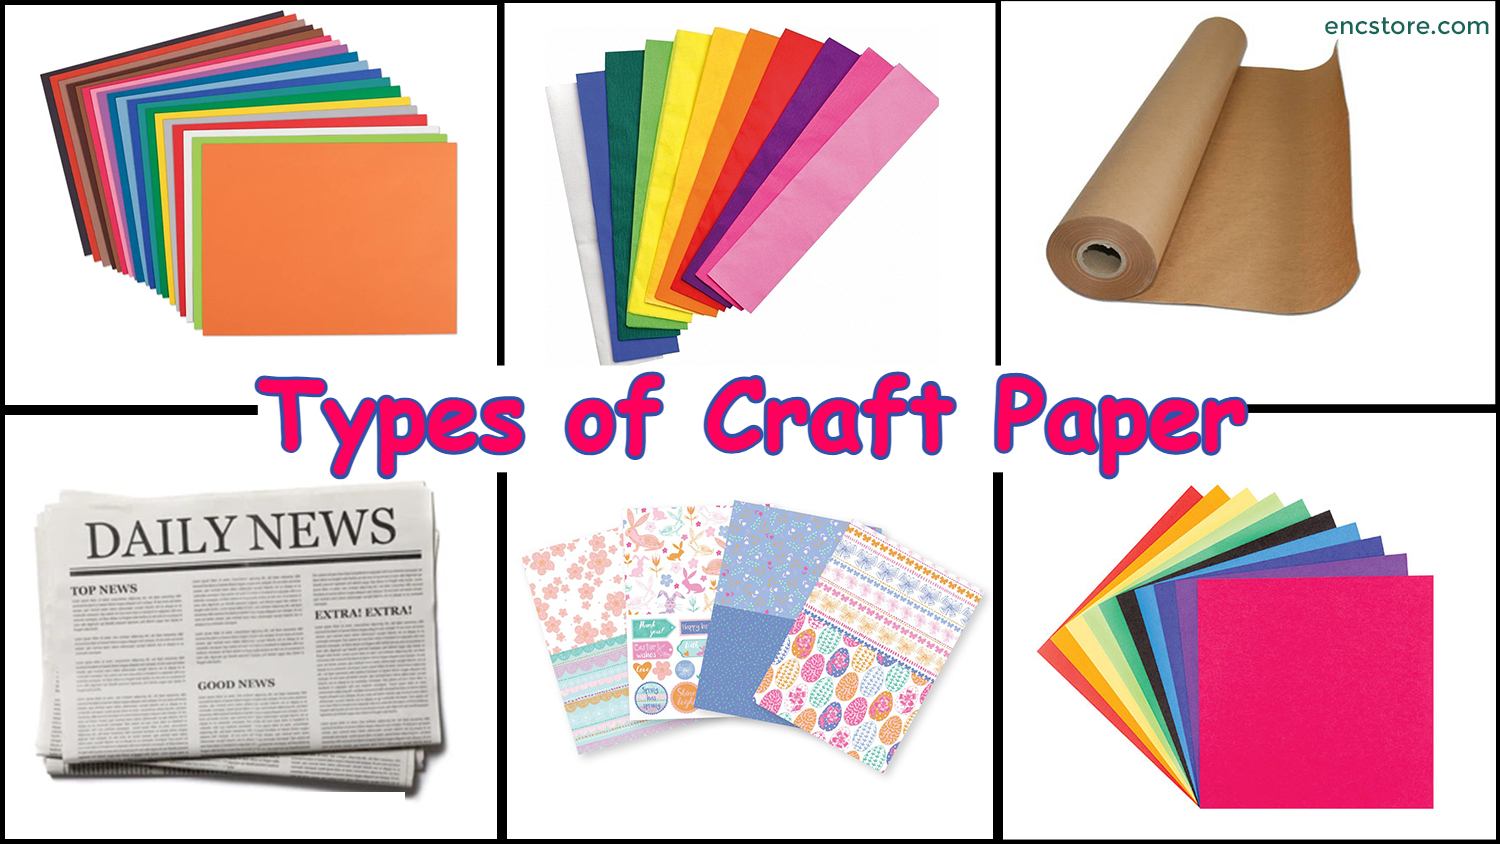 https://www.encstore.com/assets/blogs/1652451484-types-of-craft-paper.jpg